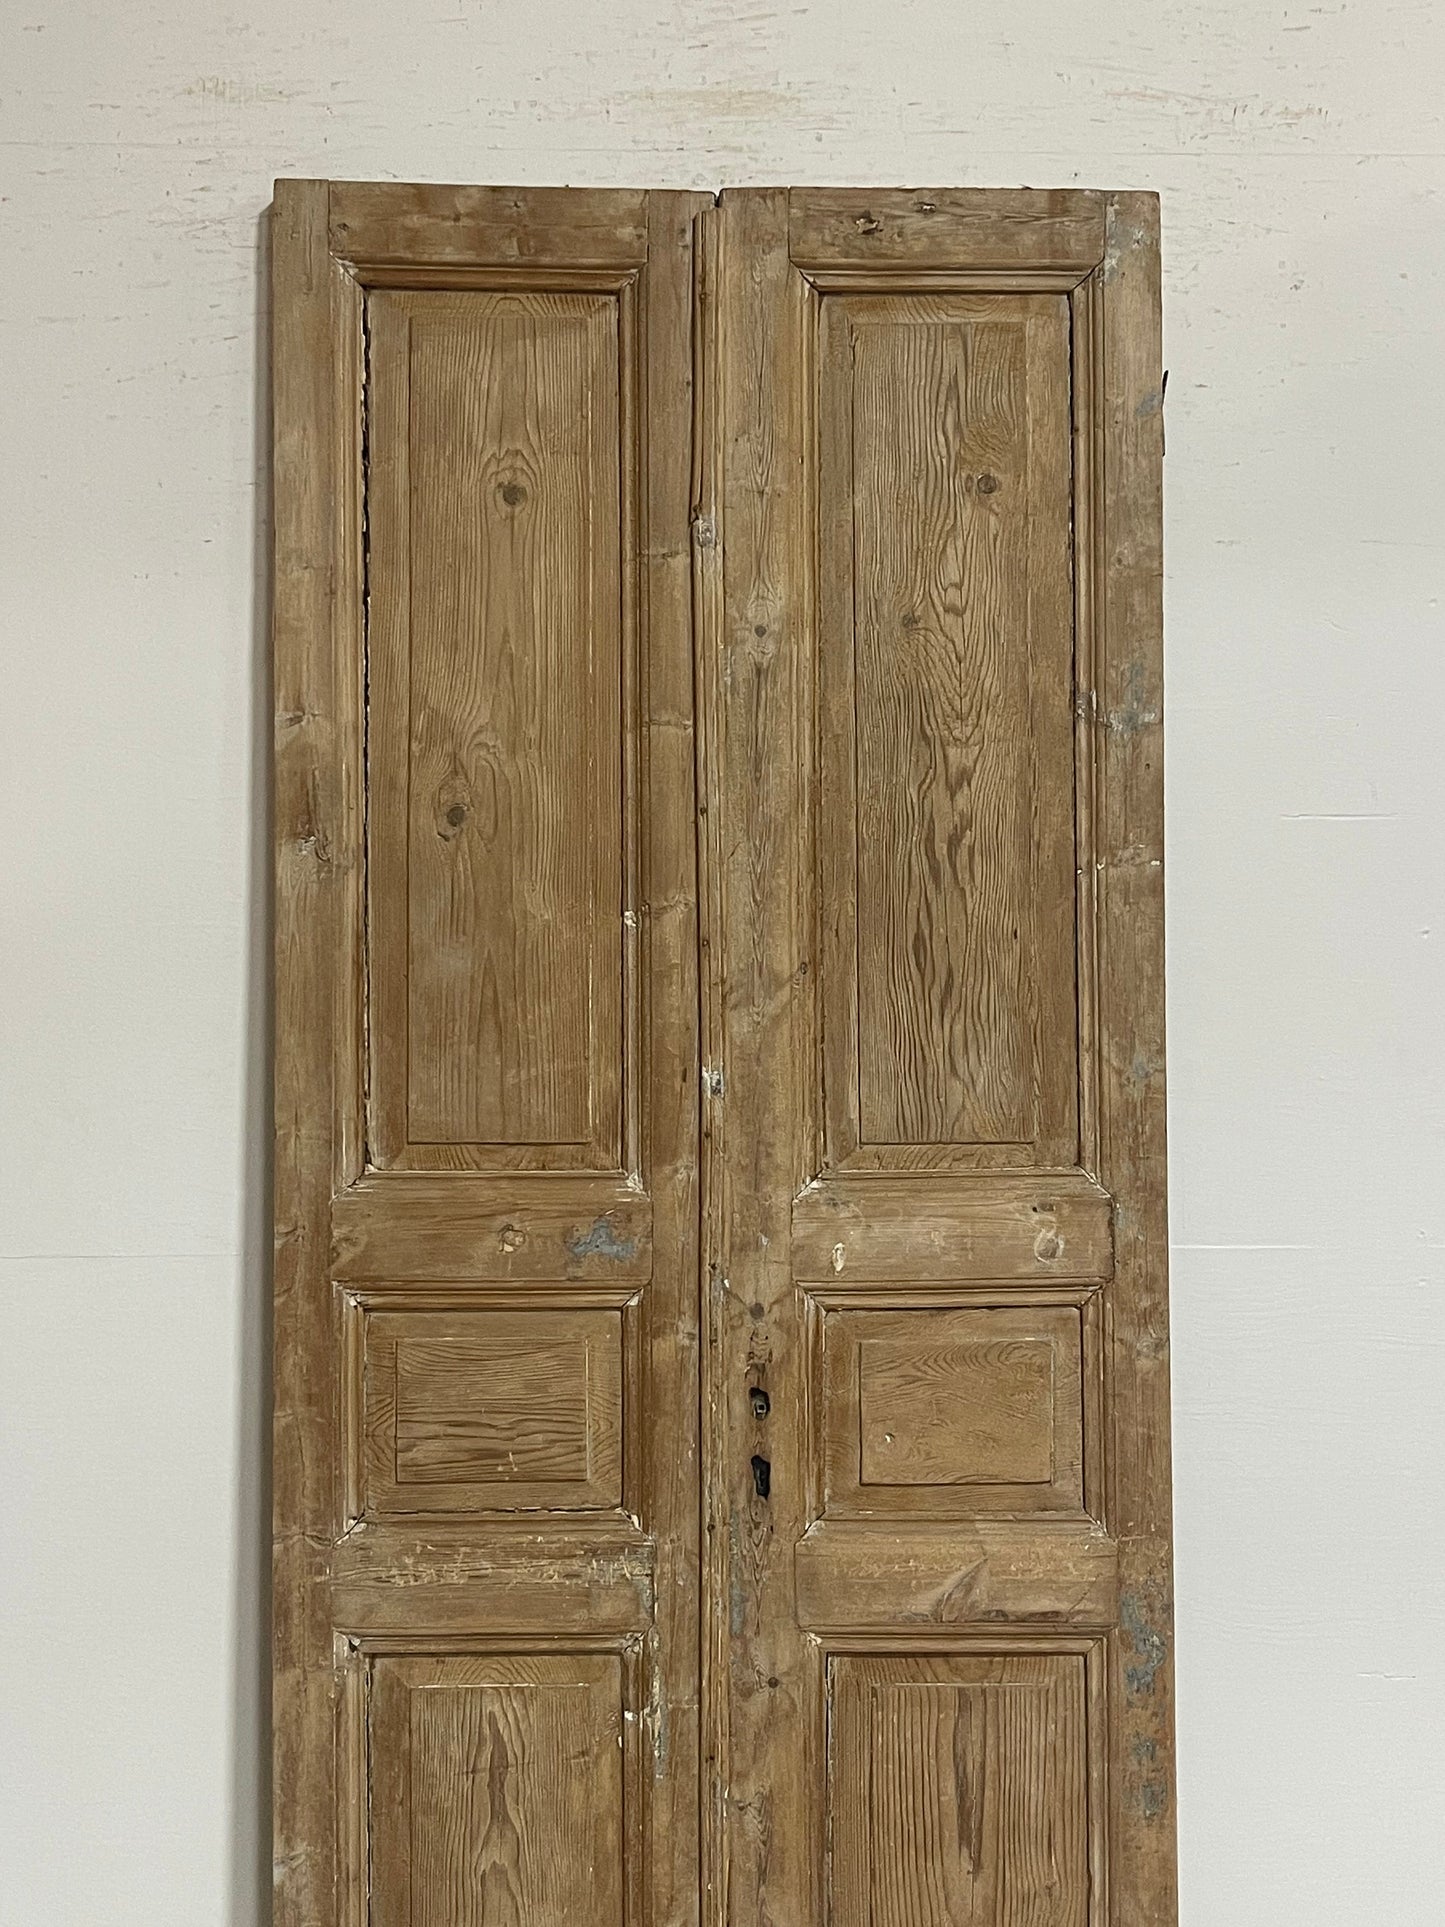 Antique French panel doors (94x38) G0154s